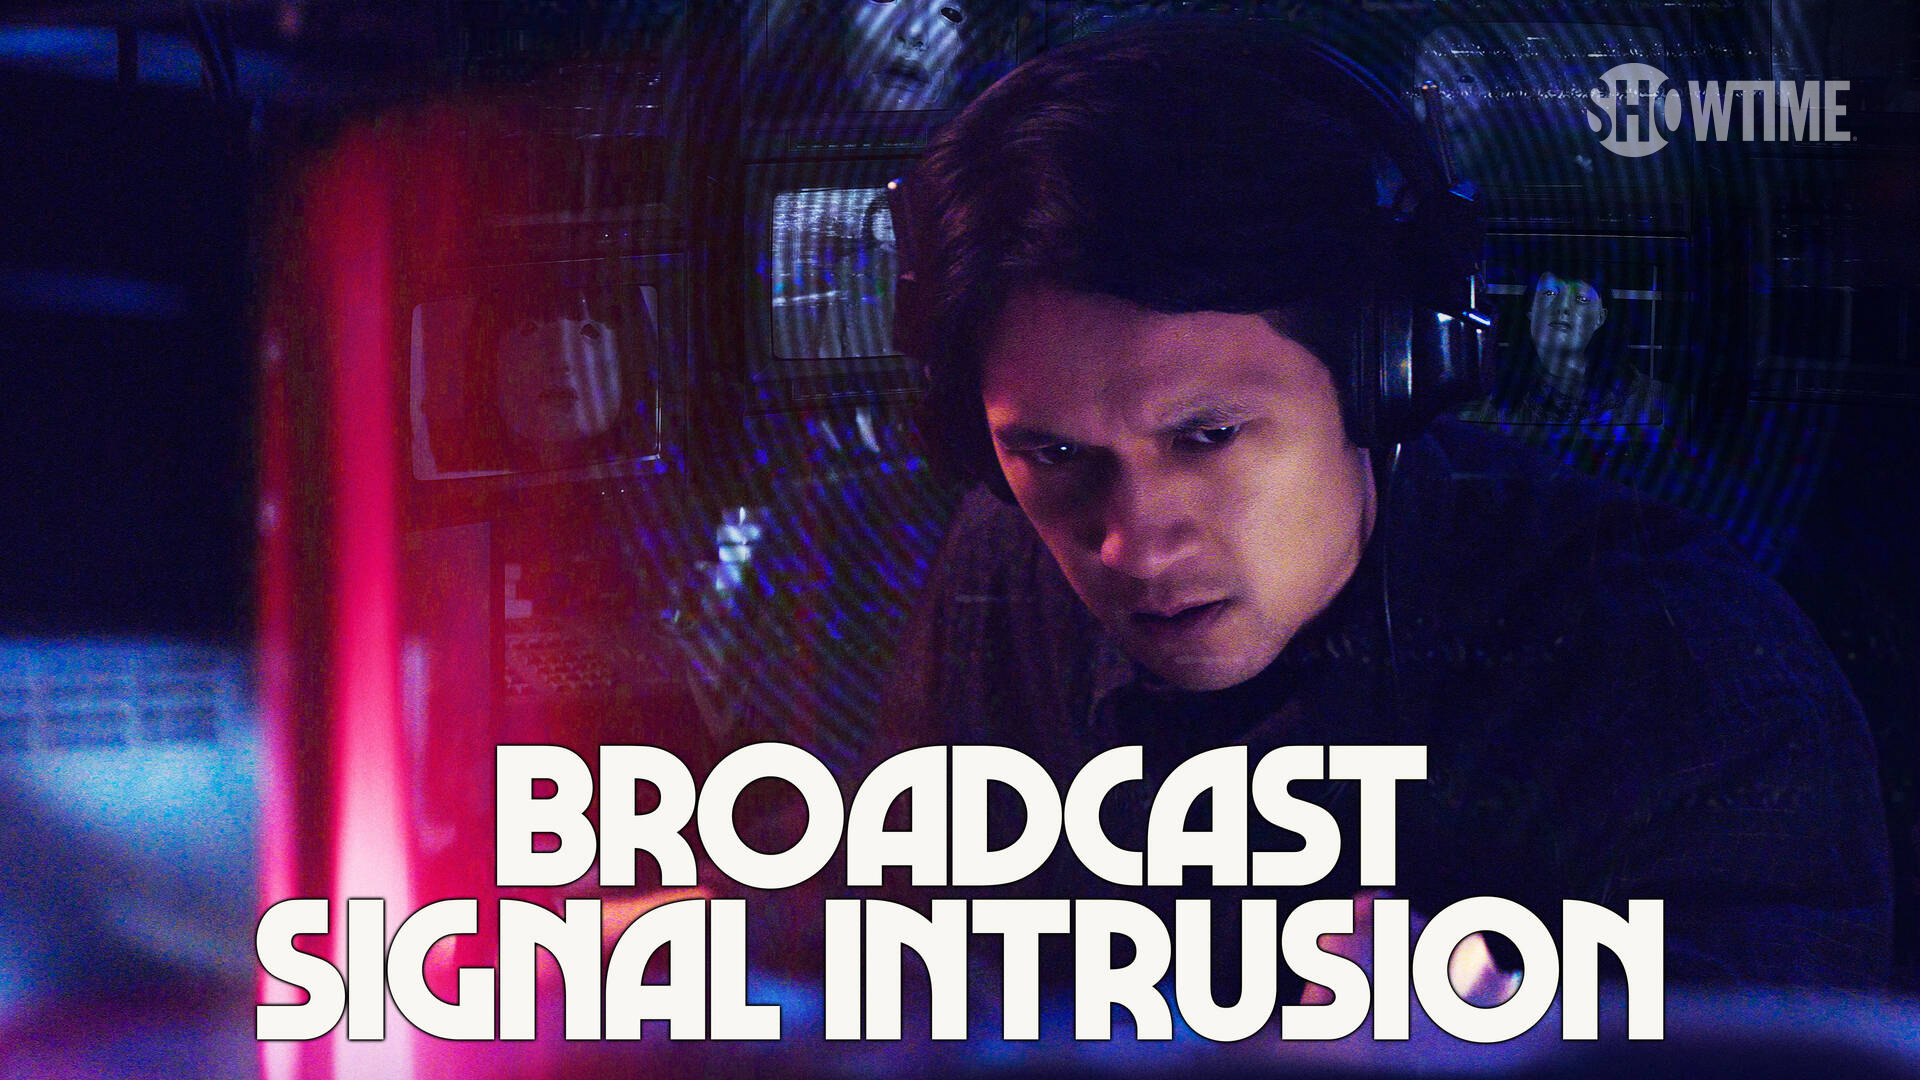 broadcast signal intrusion 2021 watch online